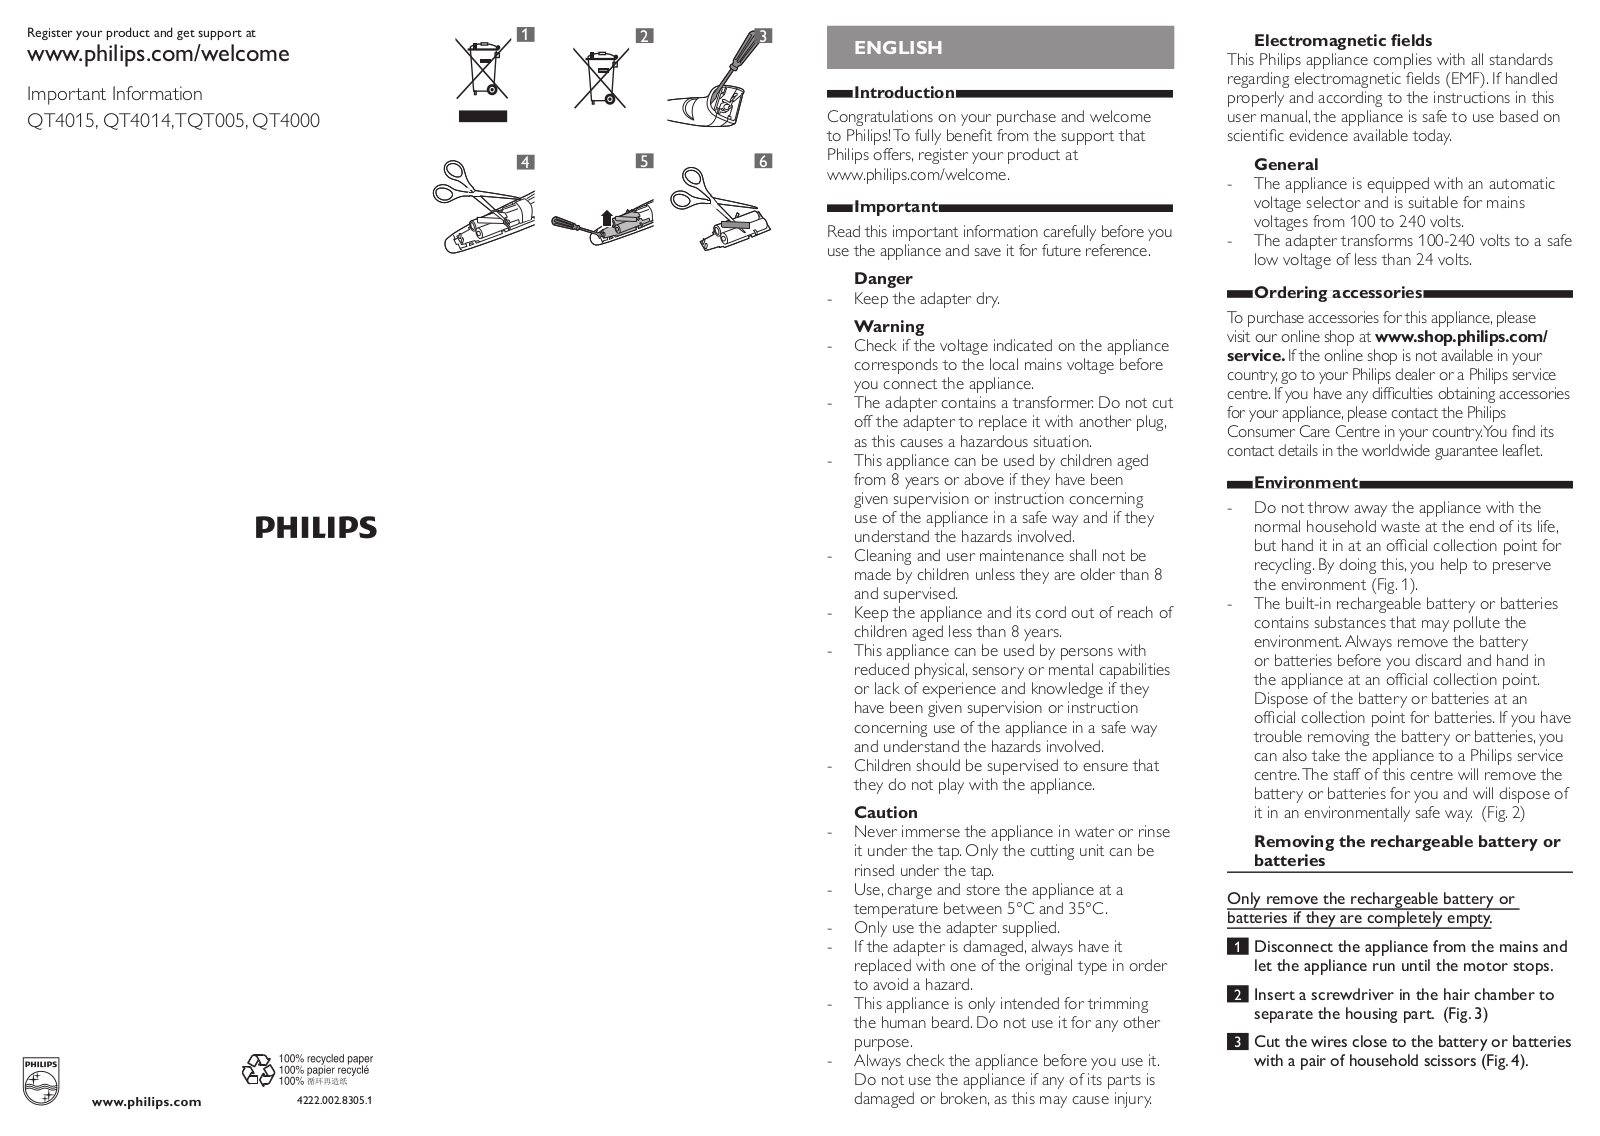 Philips QT4014/42, QT4000/42 Important Information Manual